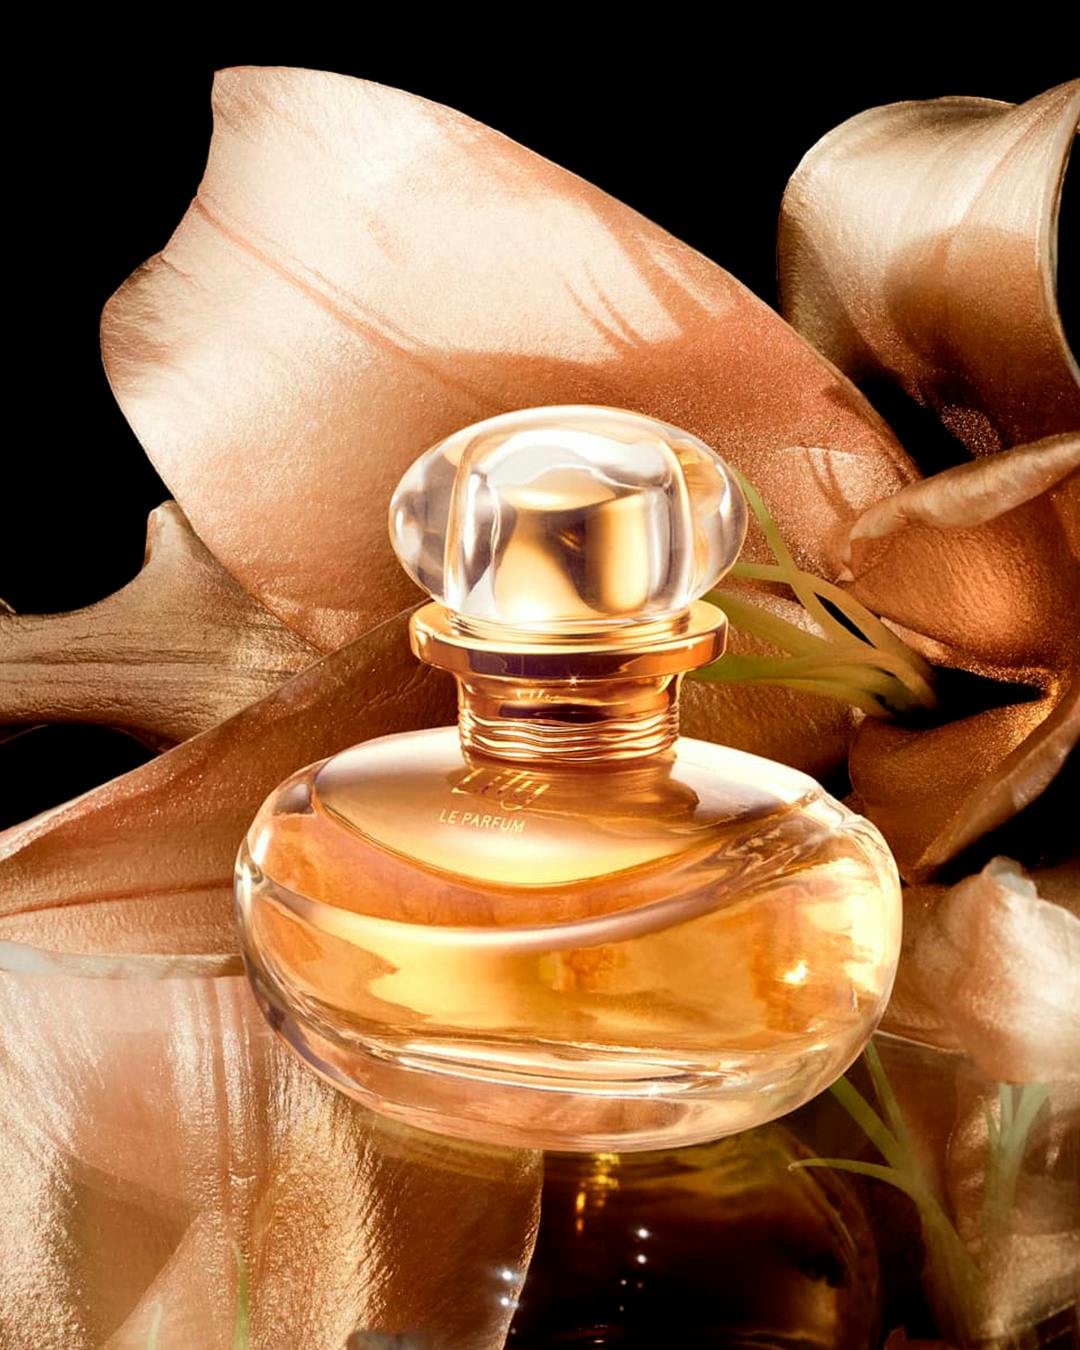  LILY Le Parfum Perfume 30ml